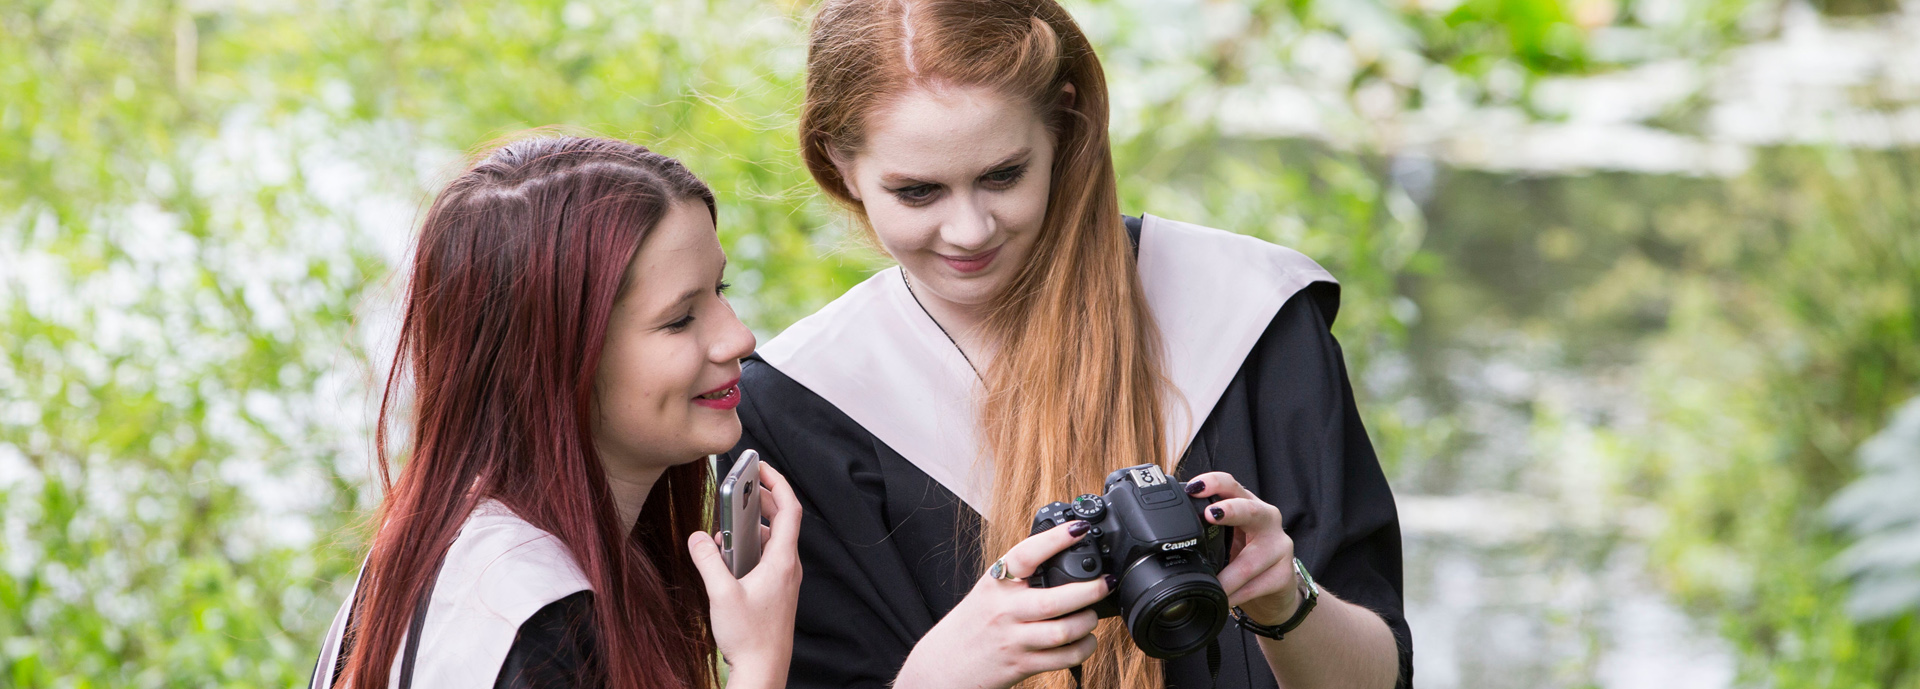 women with camera at graduation